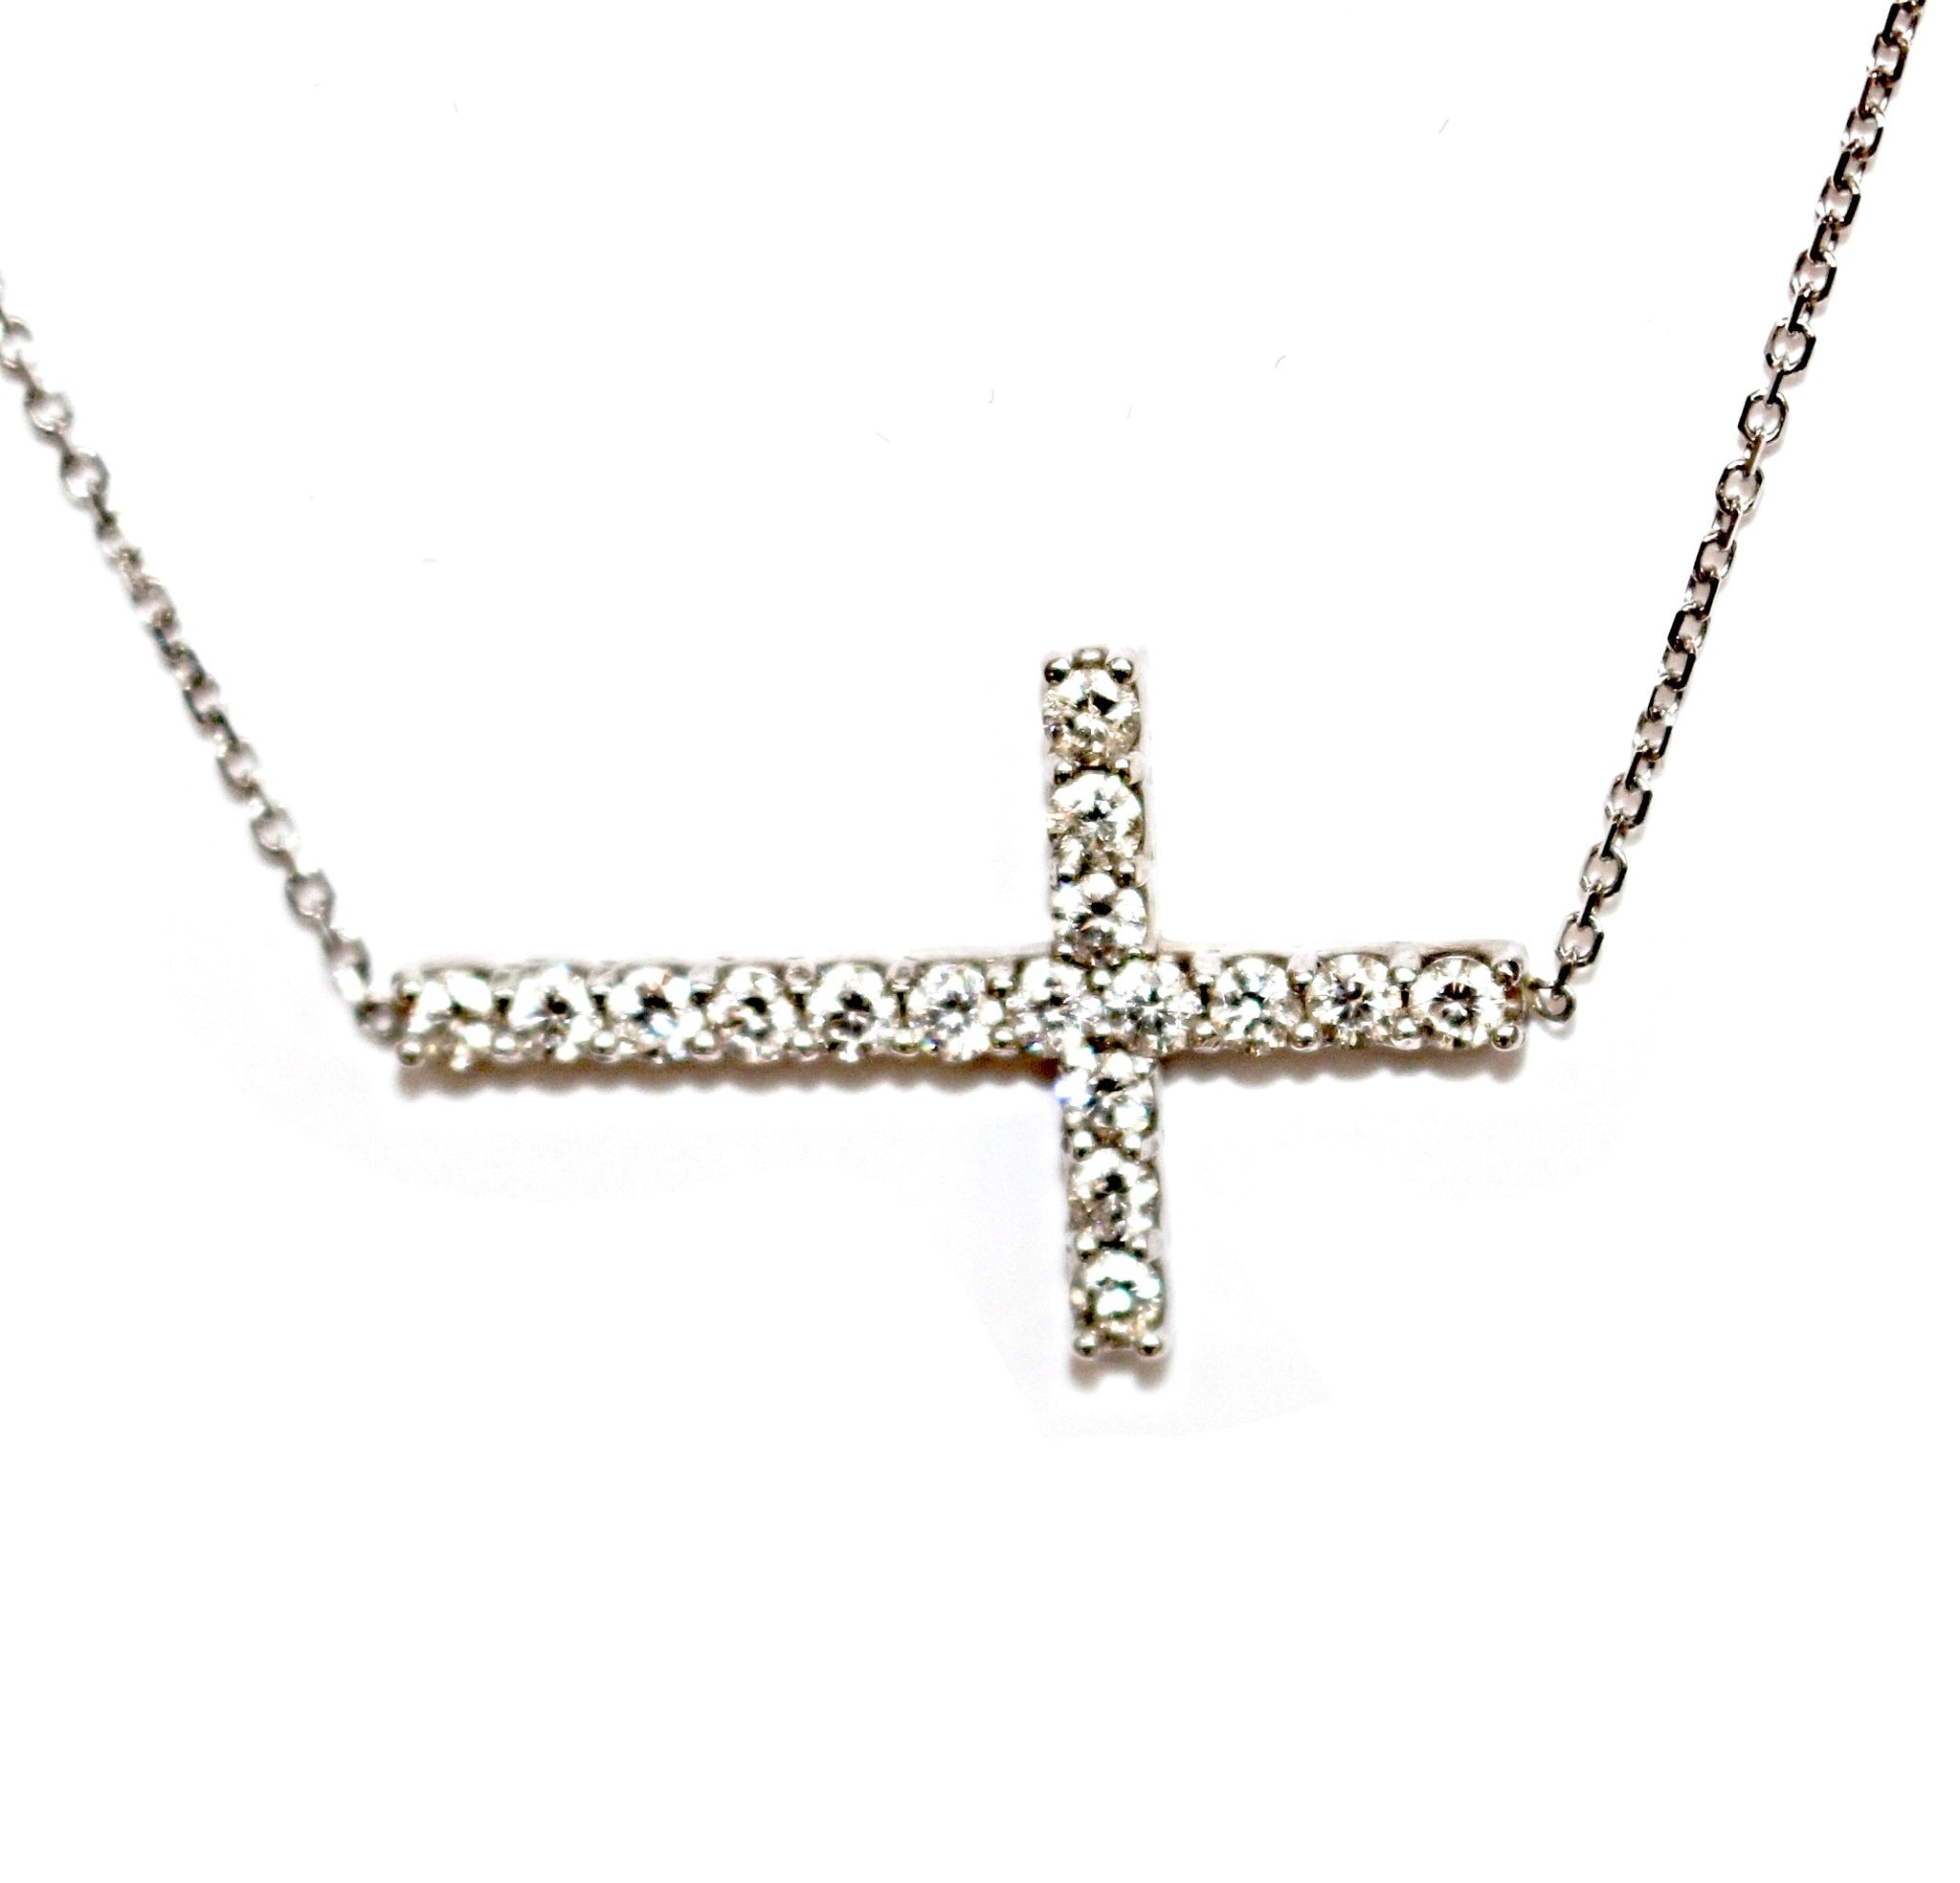 Solid 14k Yellow Gold Sideways Cross Crucifix Charm Pendant Chain